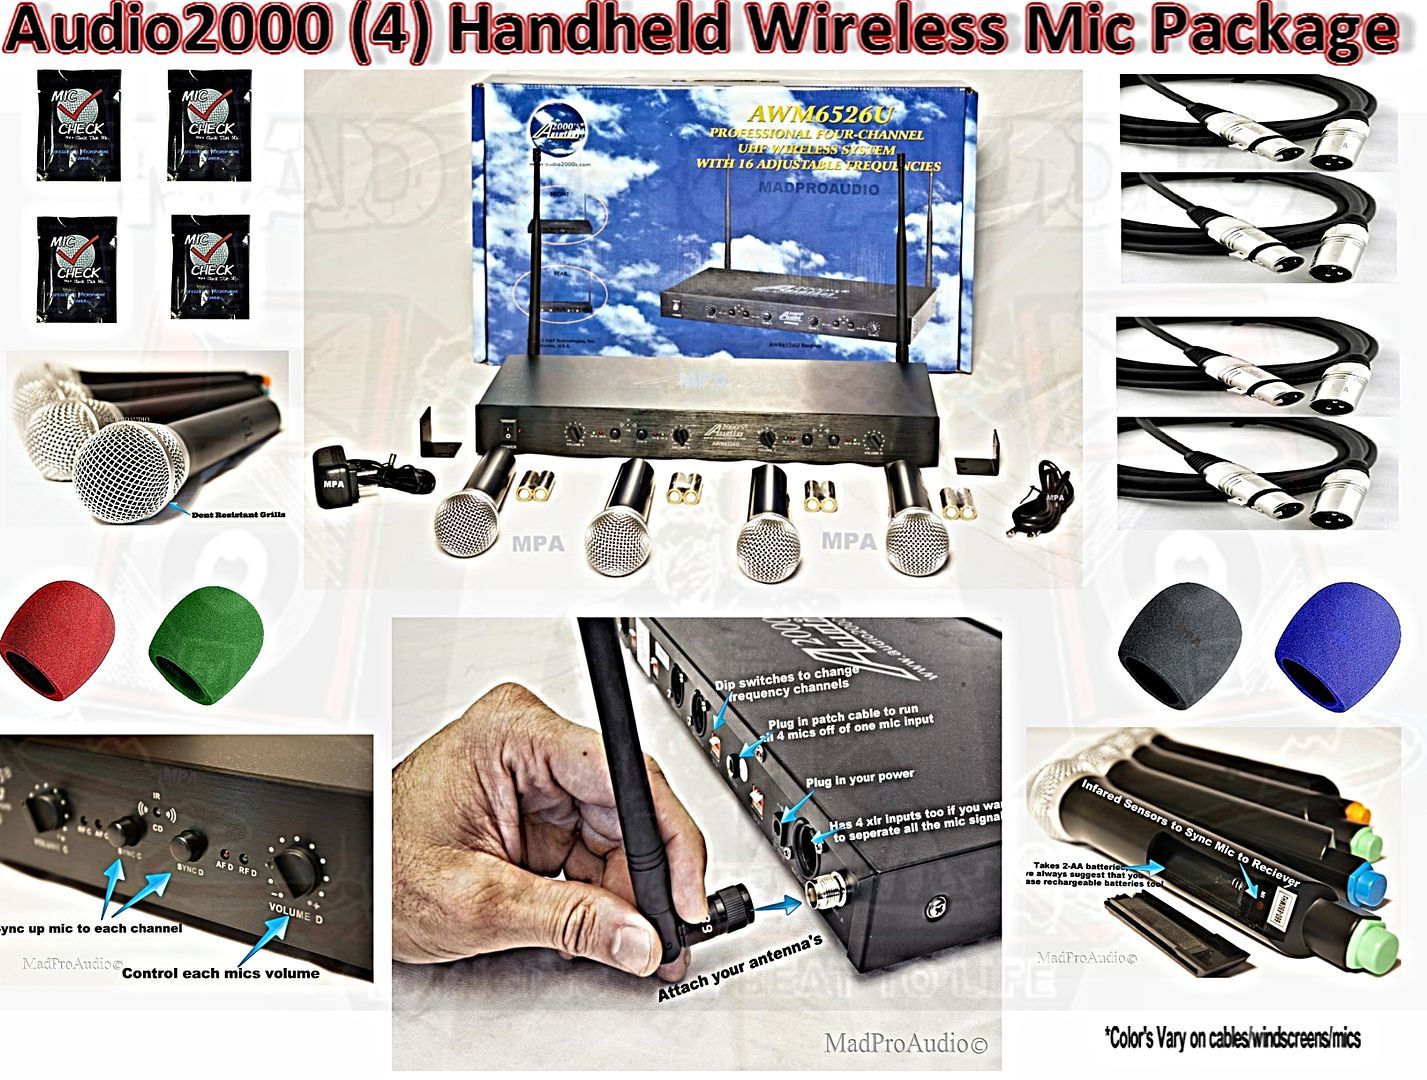 Audio2000 AWR6526u AWR-6526 4 channel Wireless Microphones, best karaoke wireless microphone set for under $300 by Madproaudio